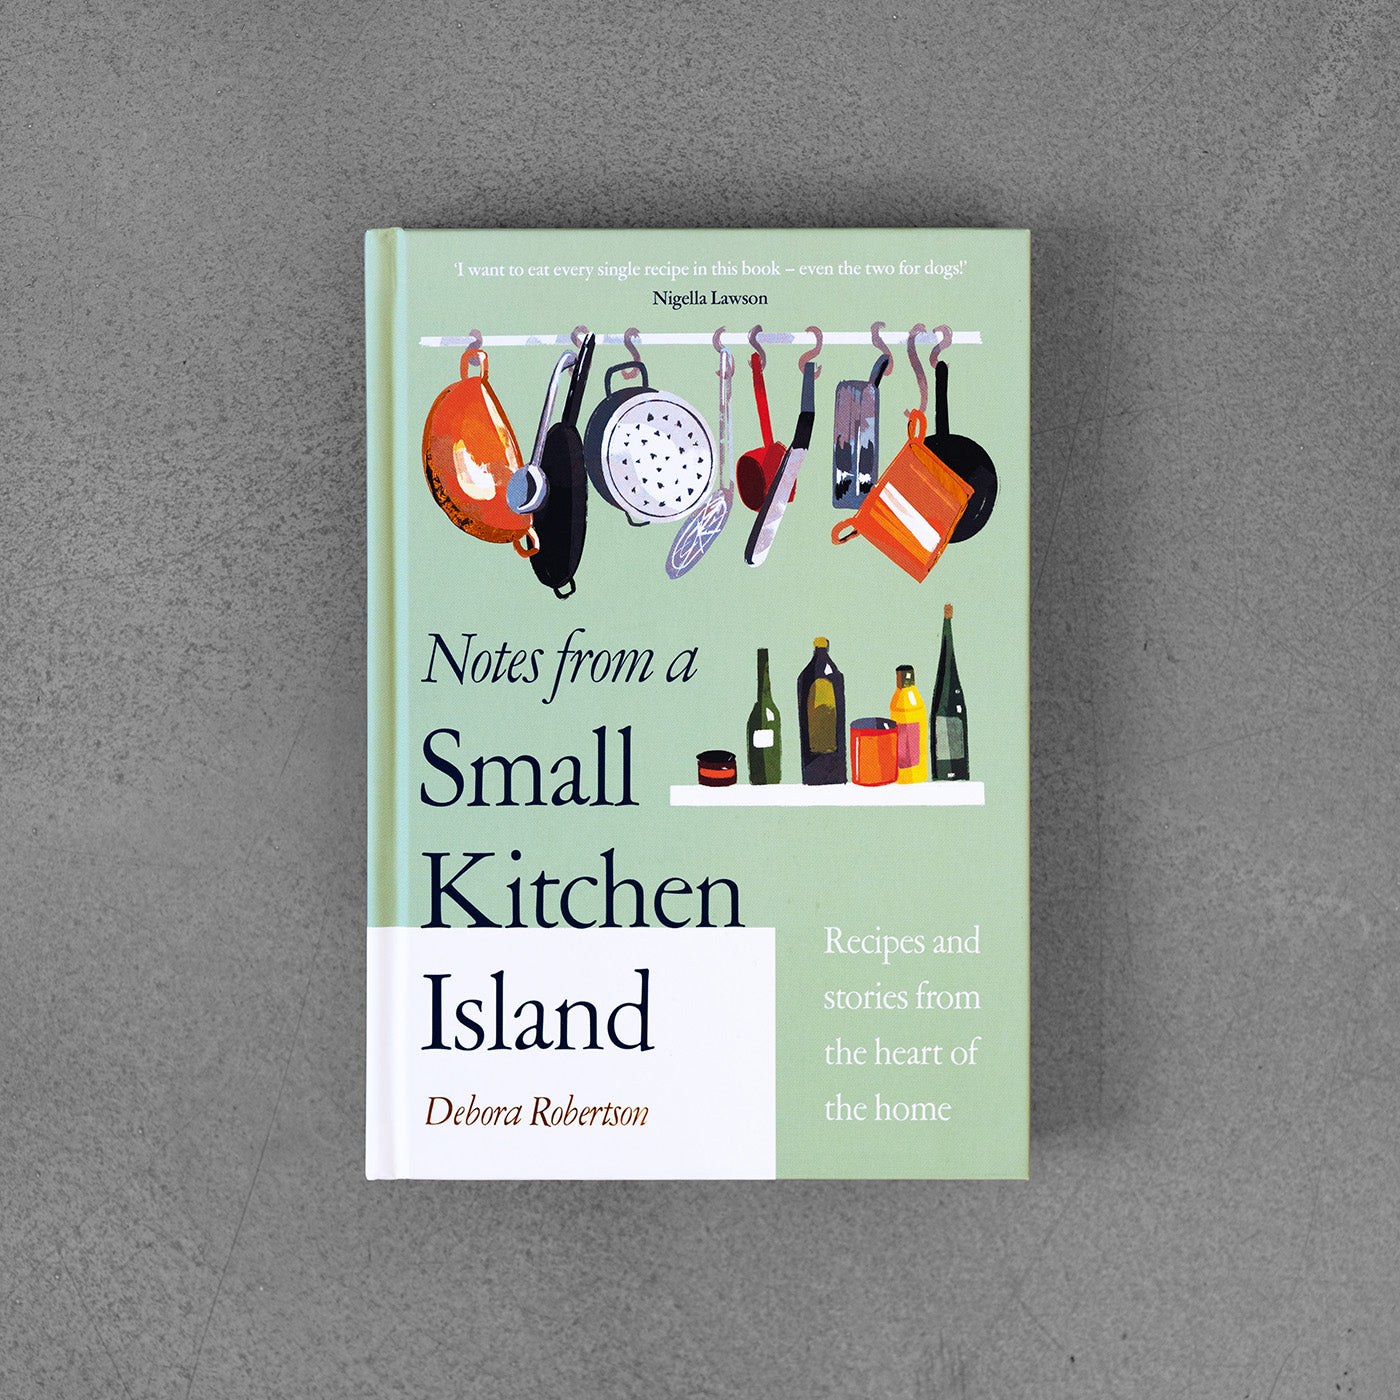 Notes from a Small Kitchen Island - Deborah Robertson